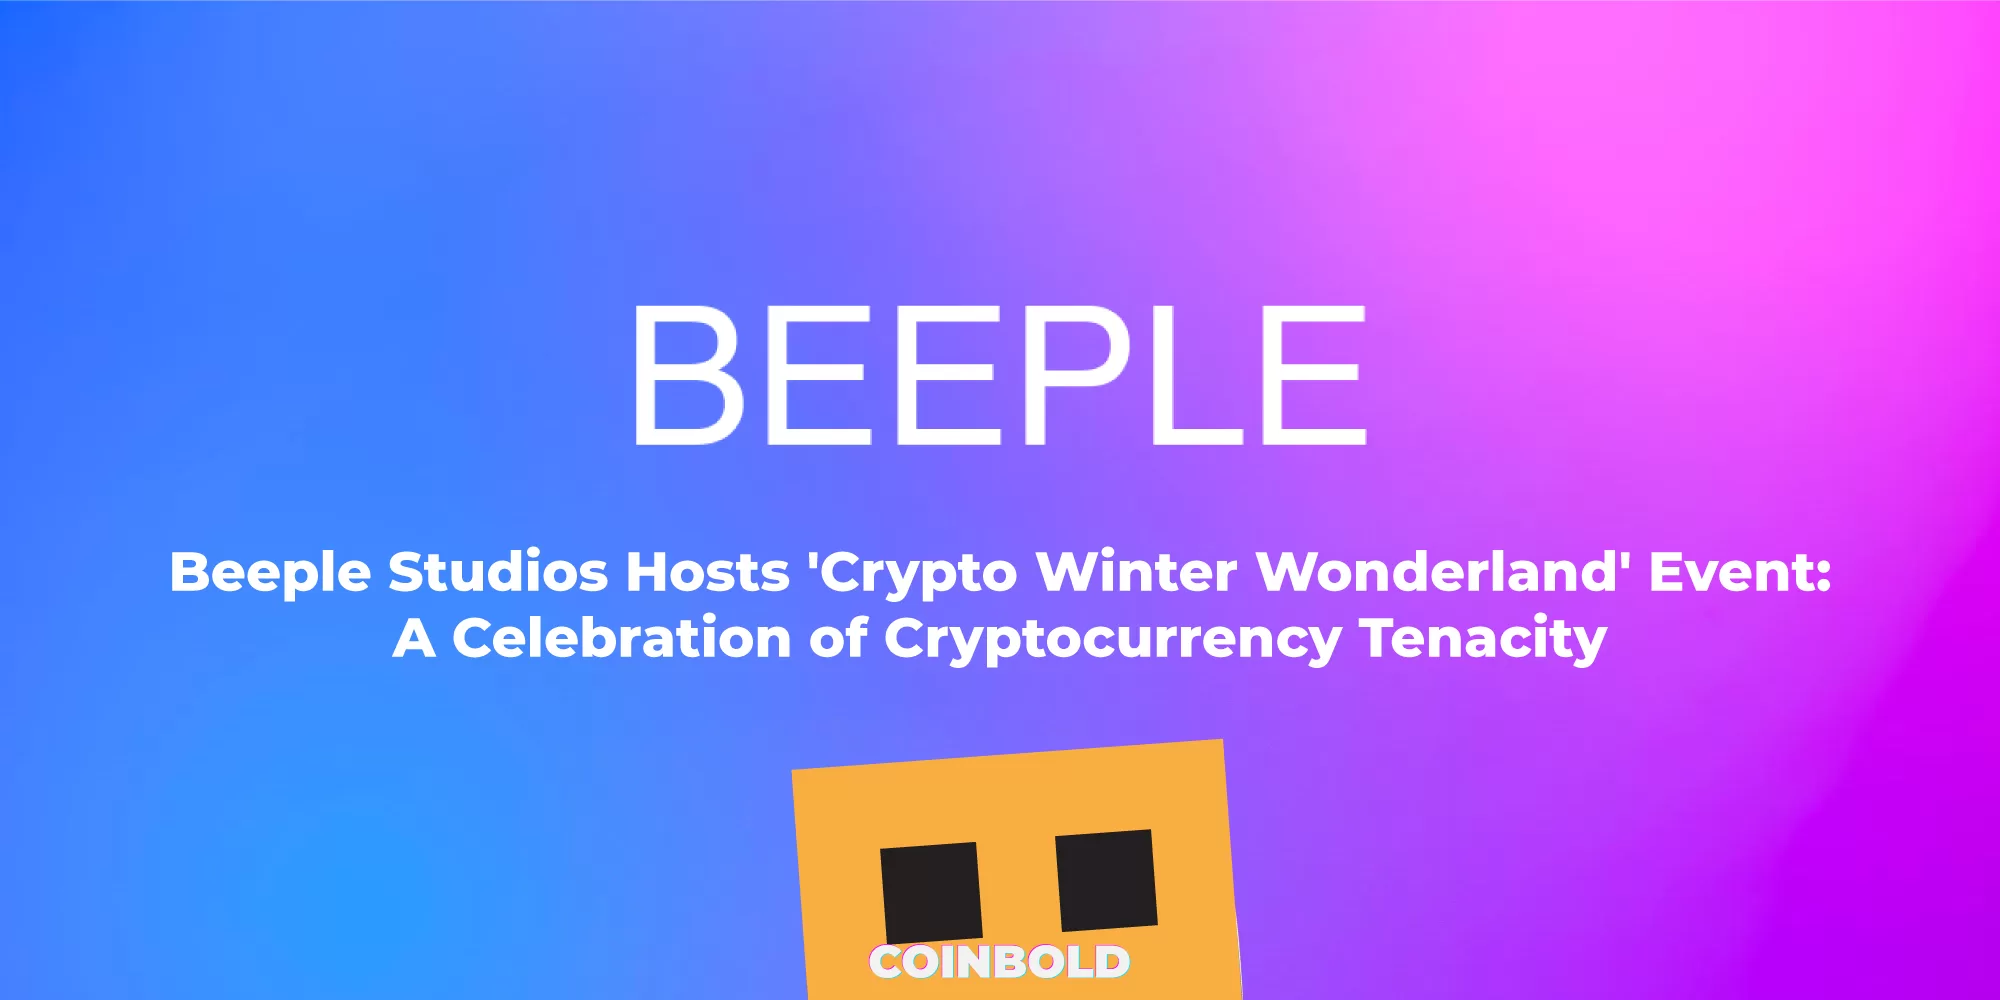 Beeple Studios Hosts 'Crypto Winter Wonderland' Event A Celebration of Cryptocurrency Tenacity